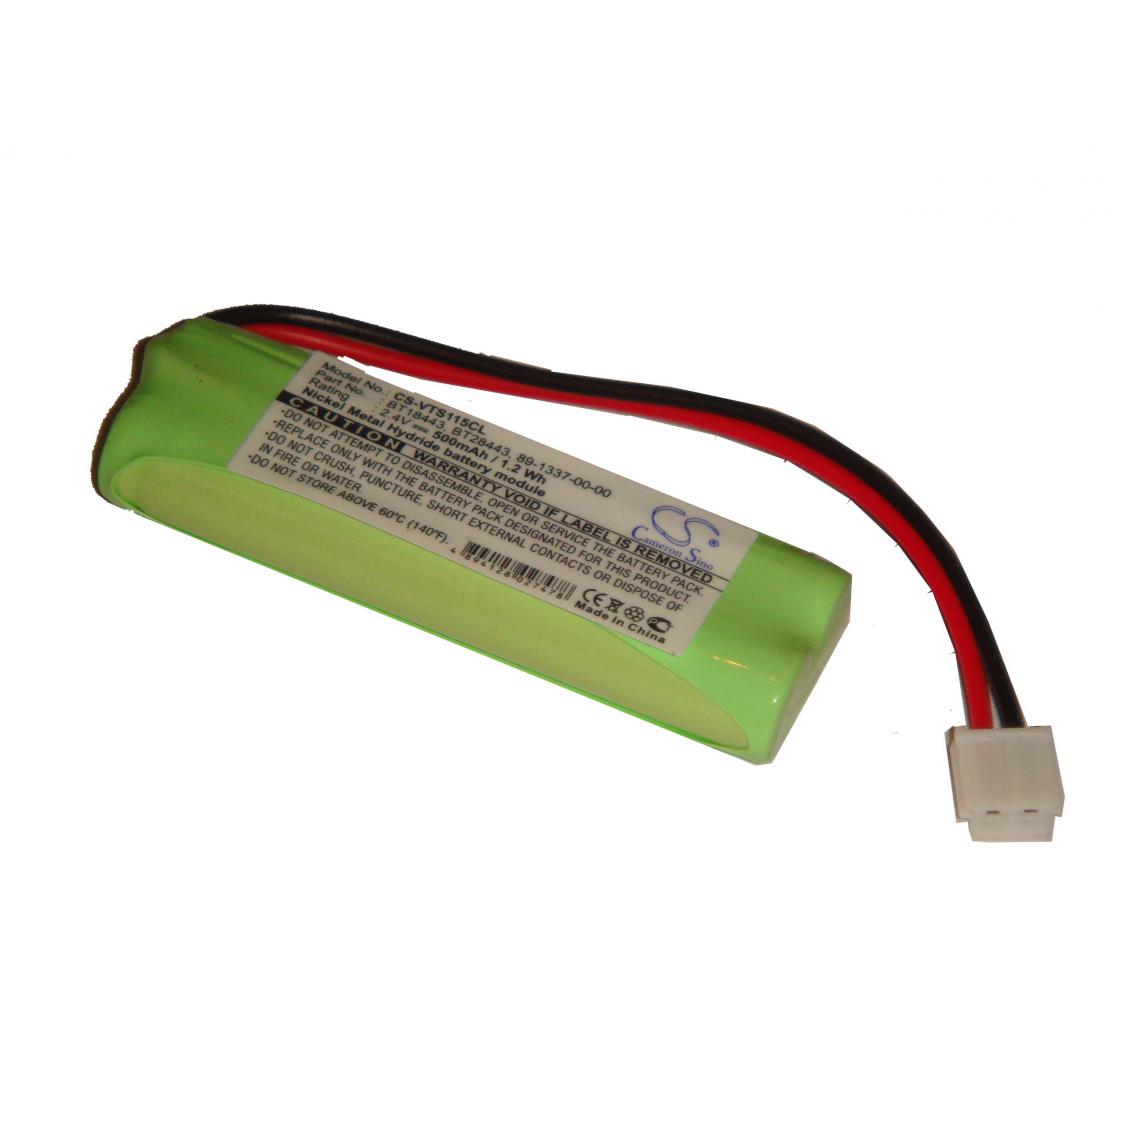 Vhbw - vhbw Batterie compatible avec V-Tech LS-6205, LS-6215, LS-6215-2, LS-6215-3, LS-62152 téléphone fixe sans fil (500mAh, 2,4V, NiMH) - Batterie téléphone